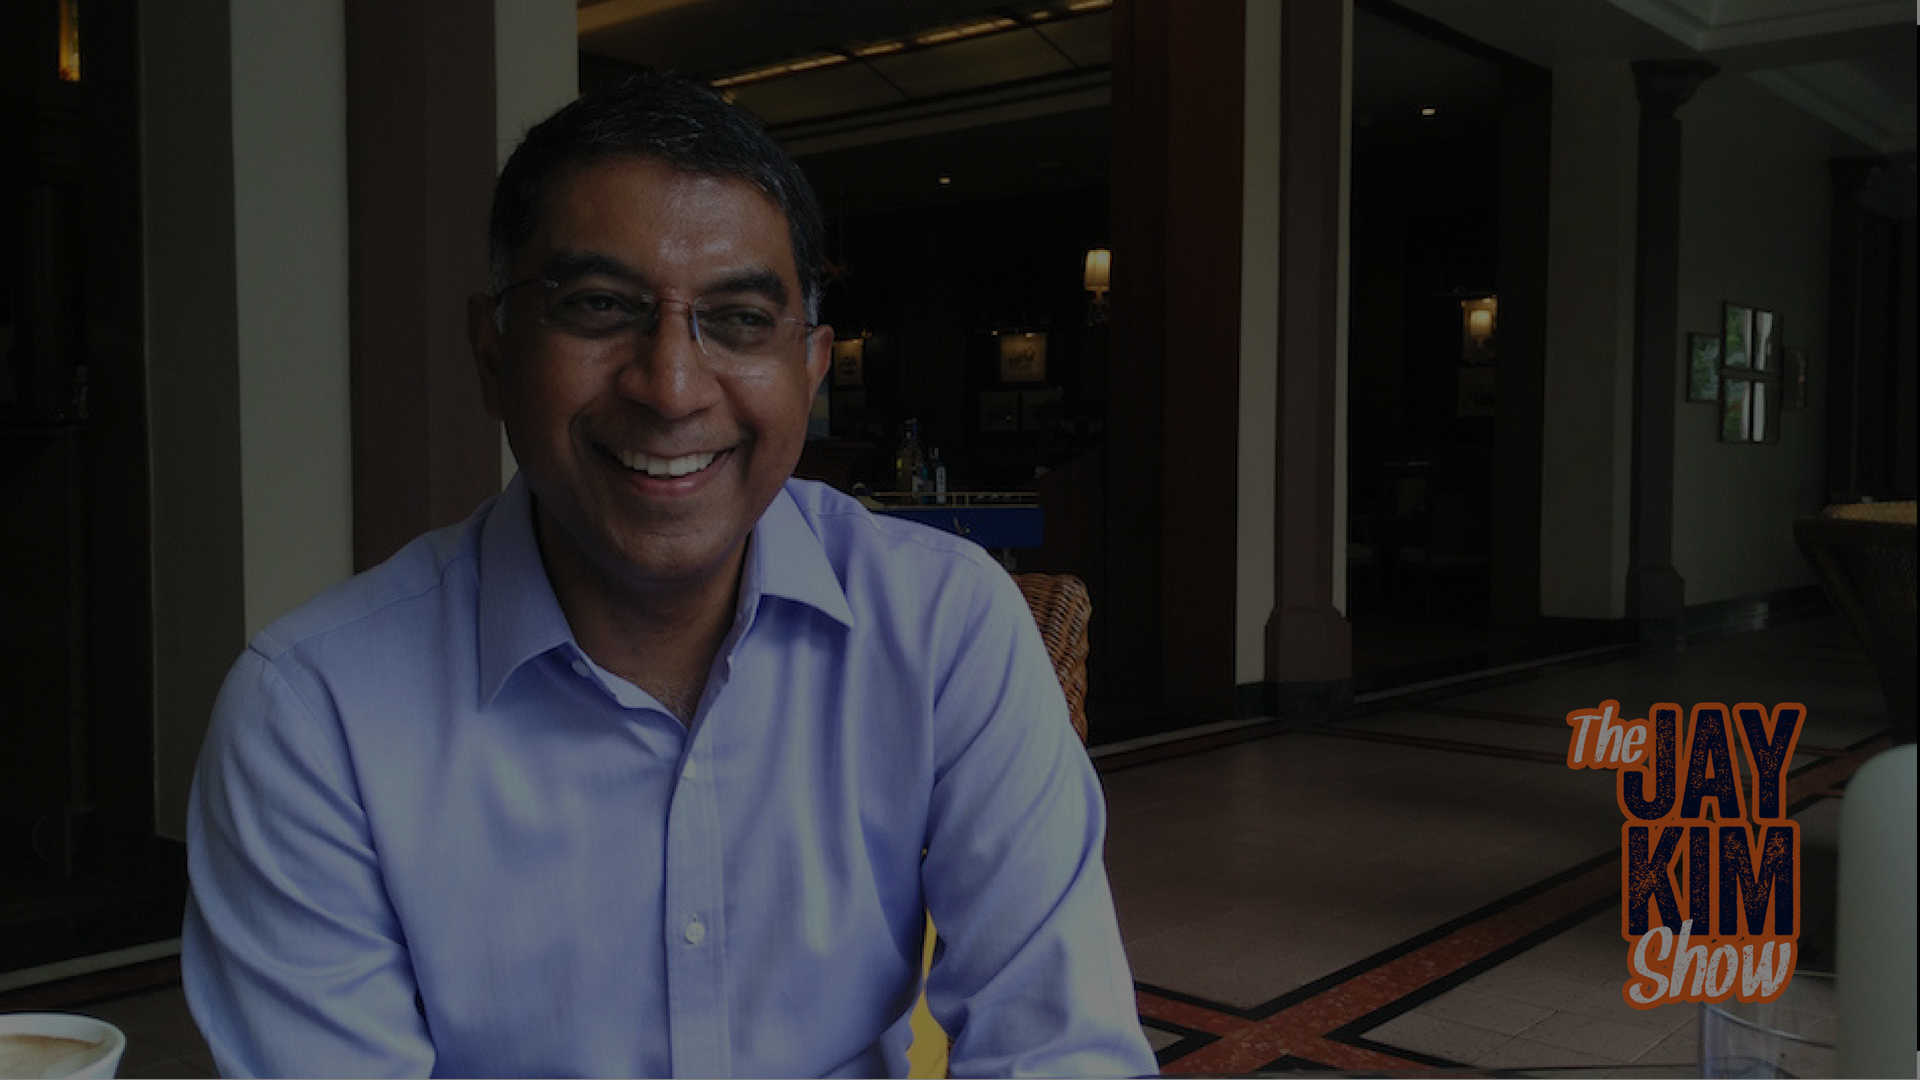 Anurag Avula, co-founder and CEO of Shopmatic